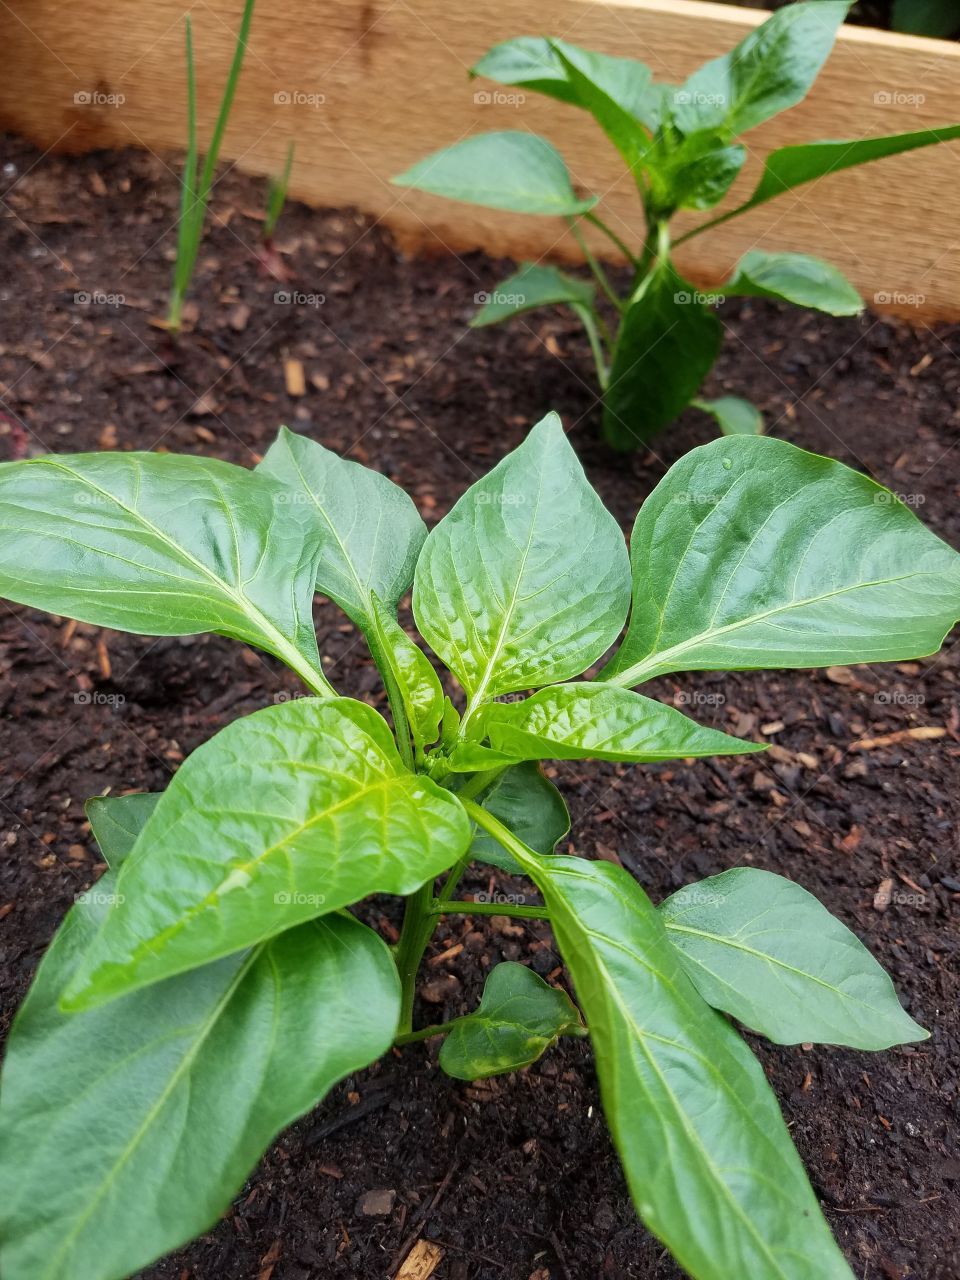 Bell pepper plants.